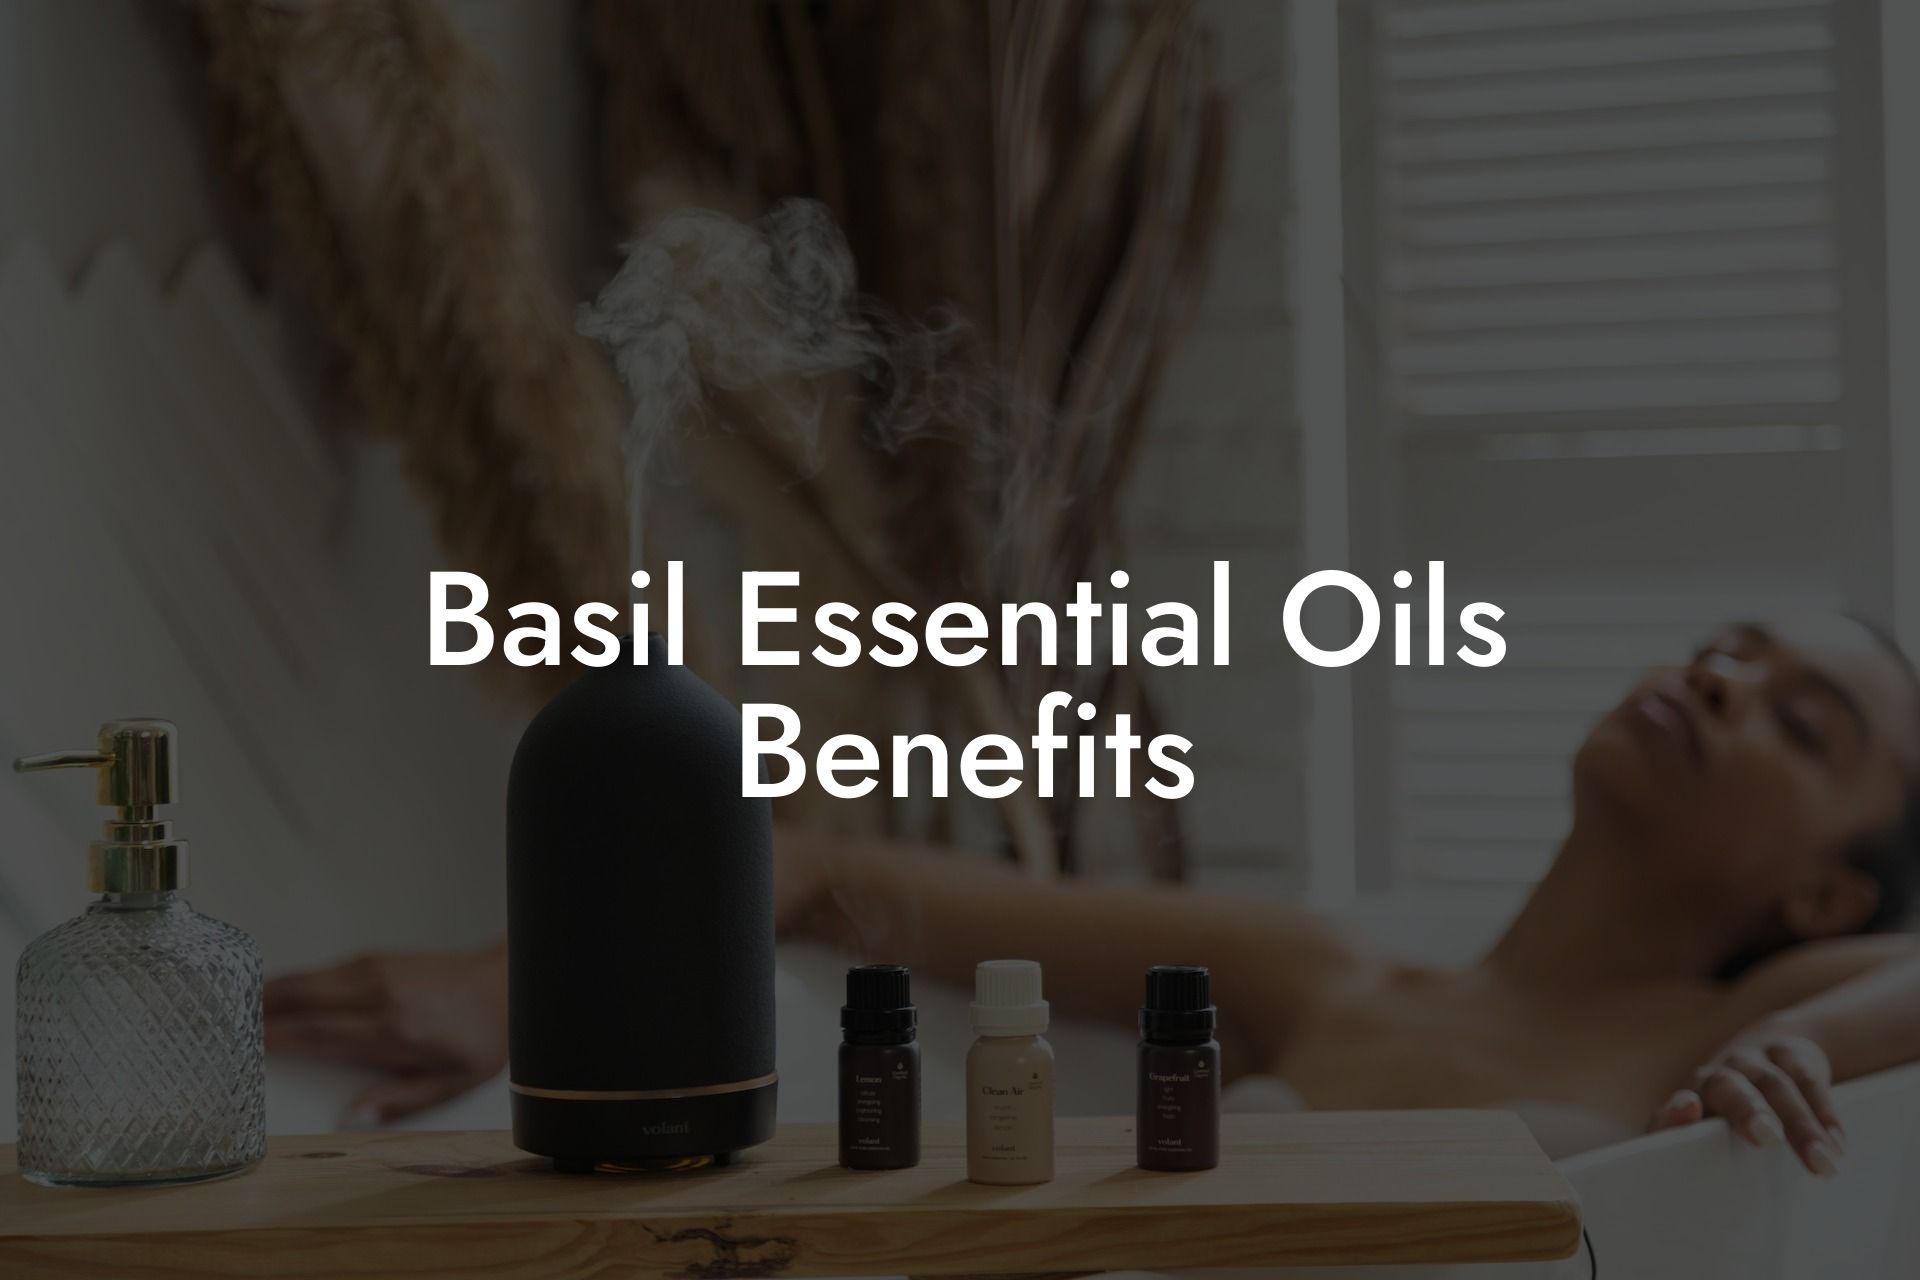 Basil Essential Oils Benefits